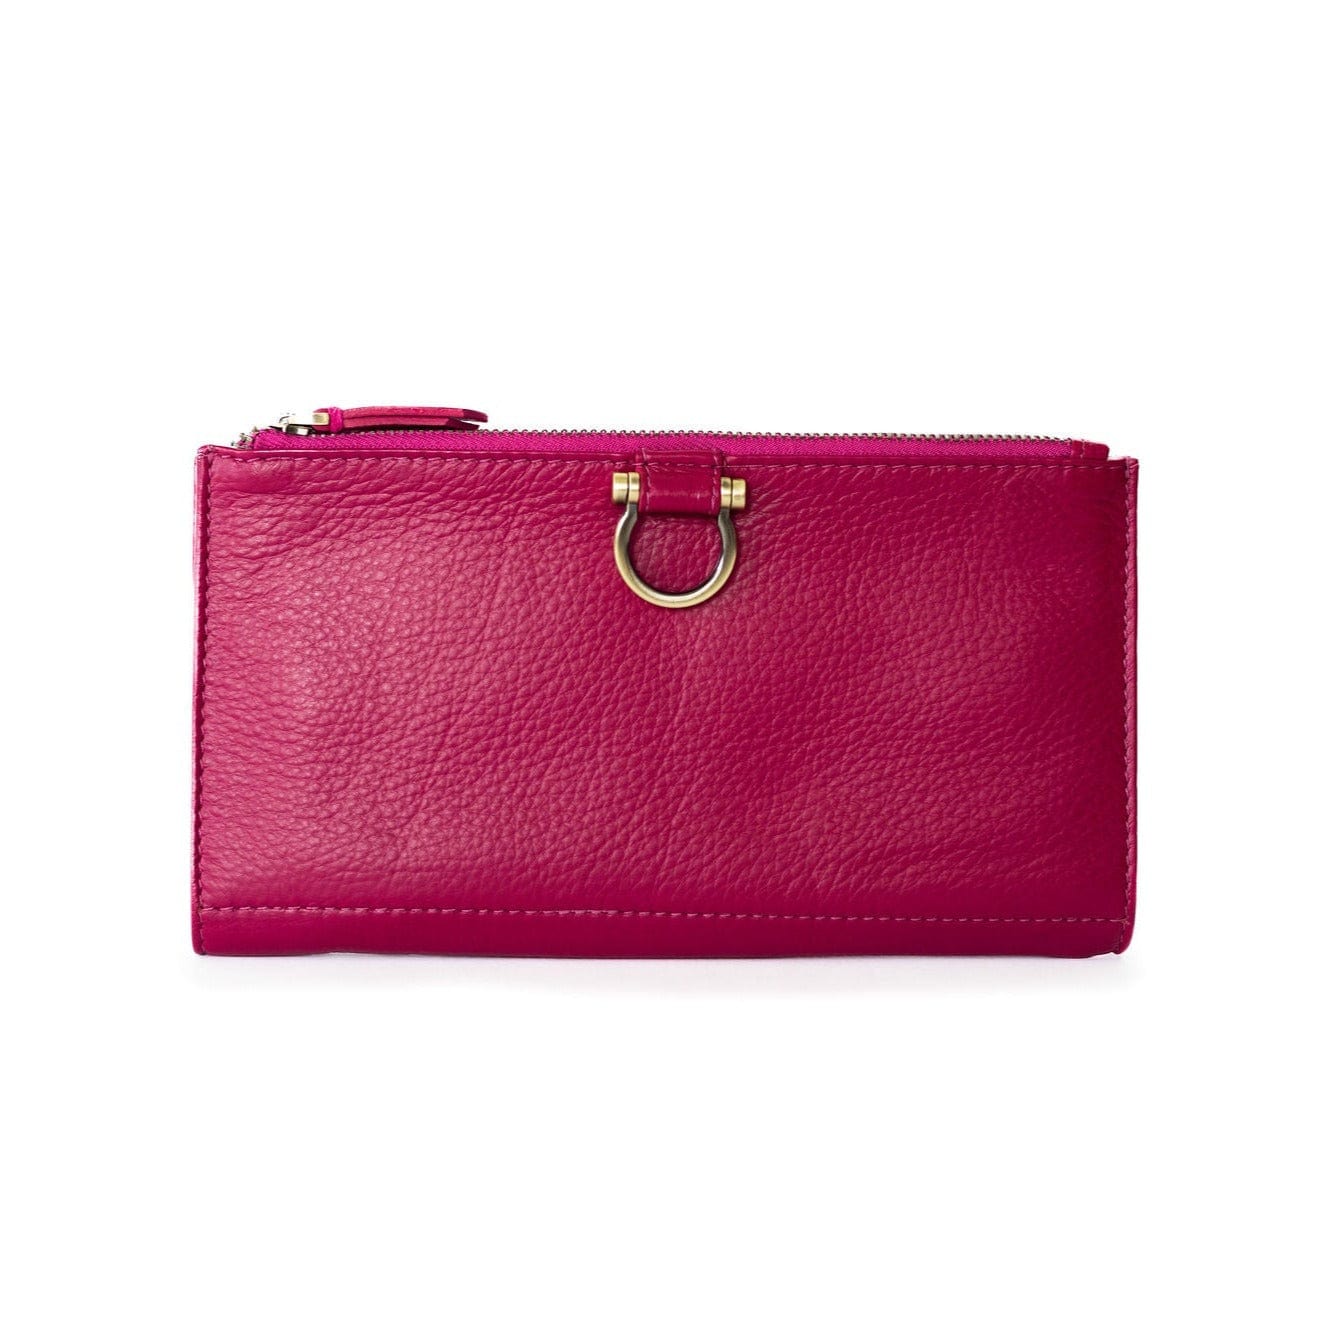 Authentic Salvatore Ferragamo Pink Leather Long Wallet